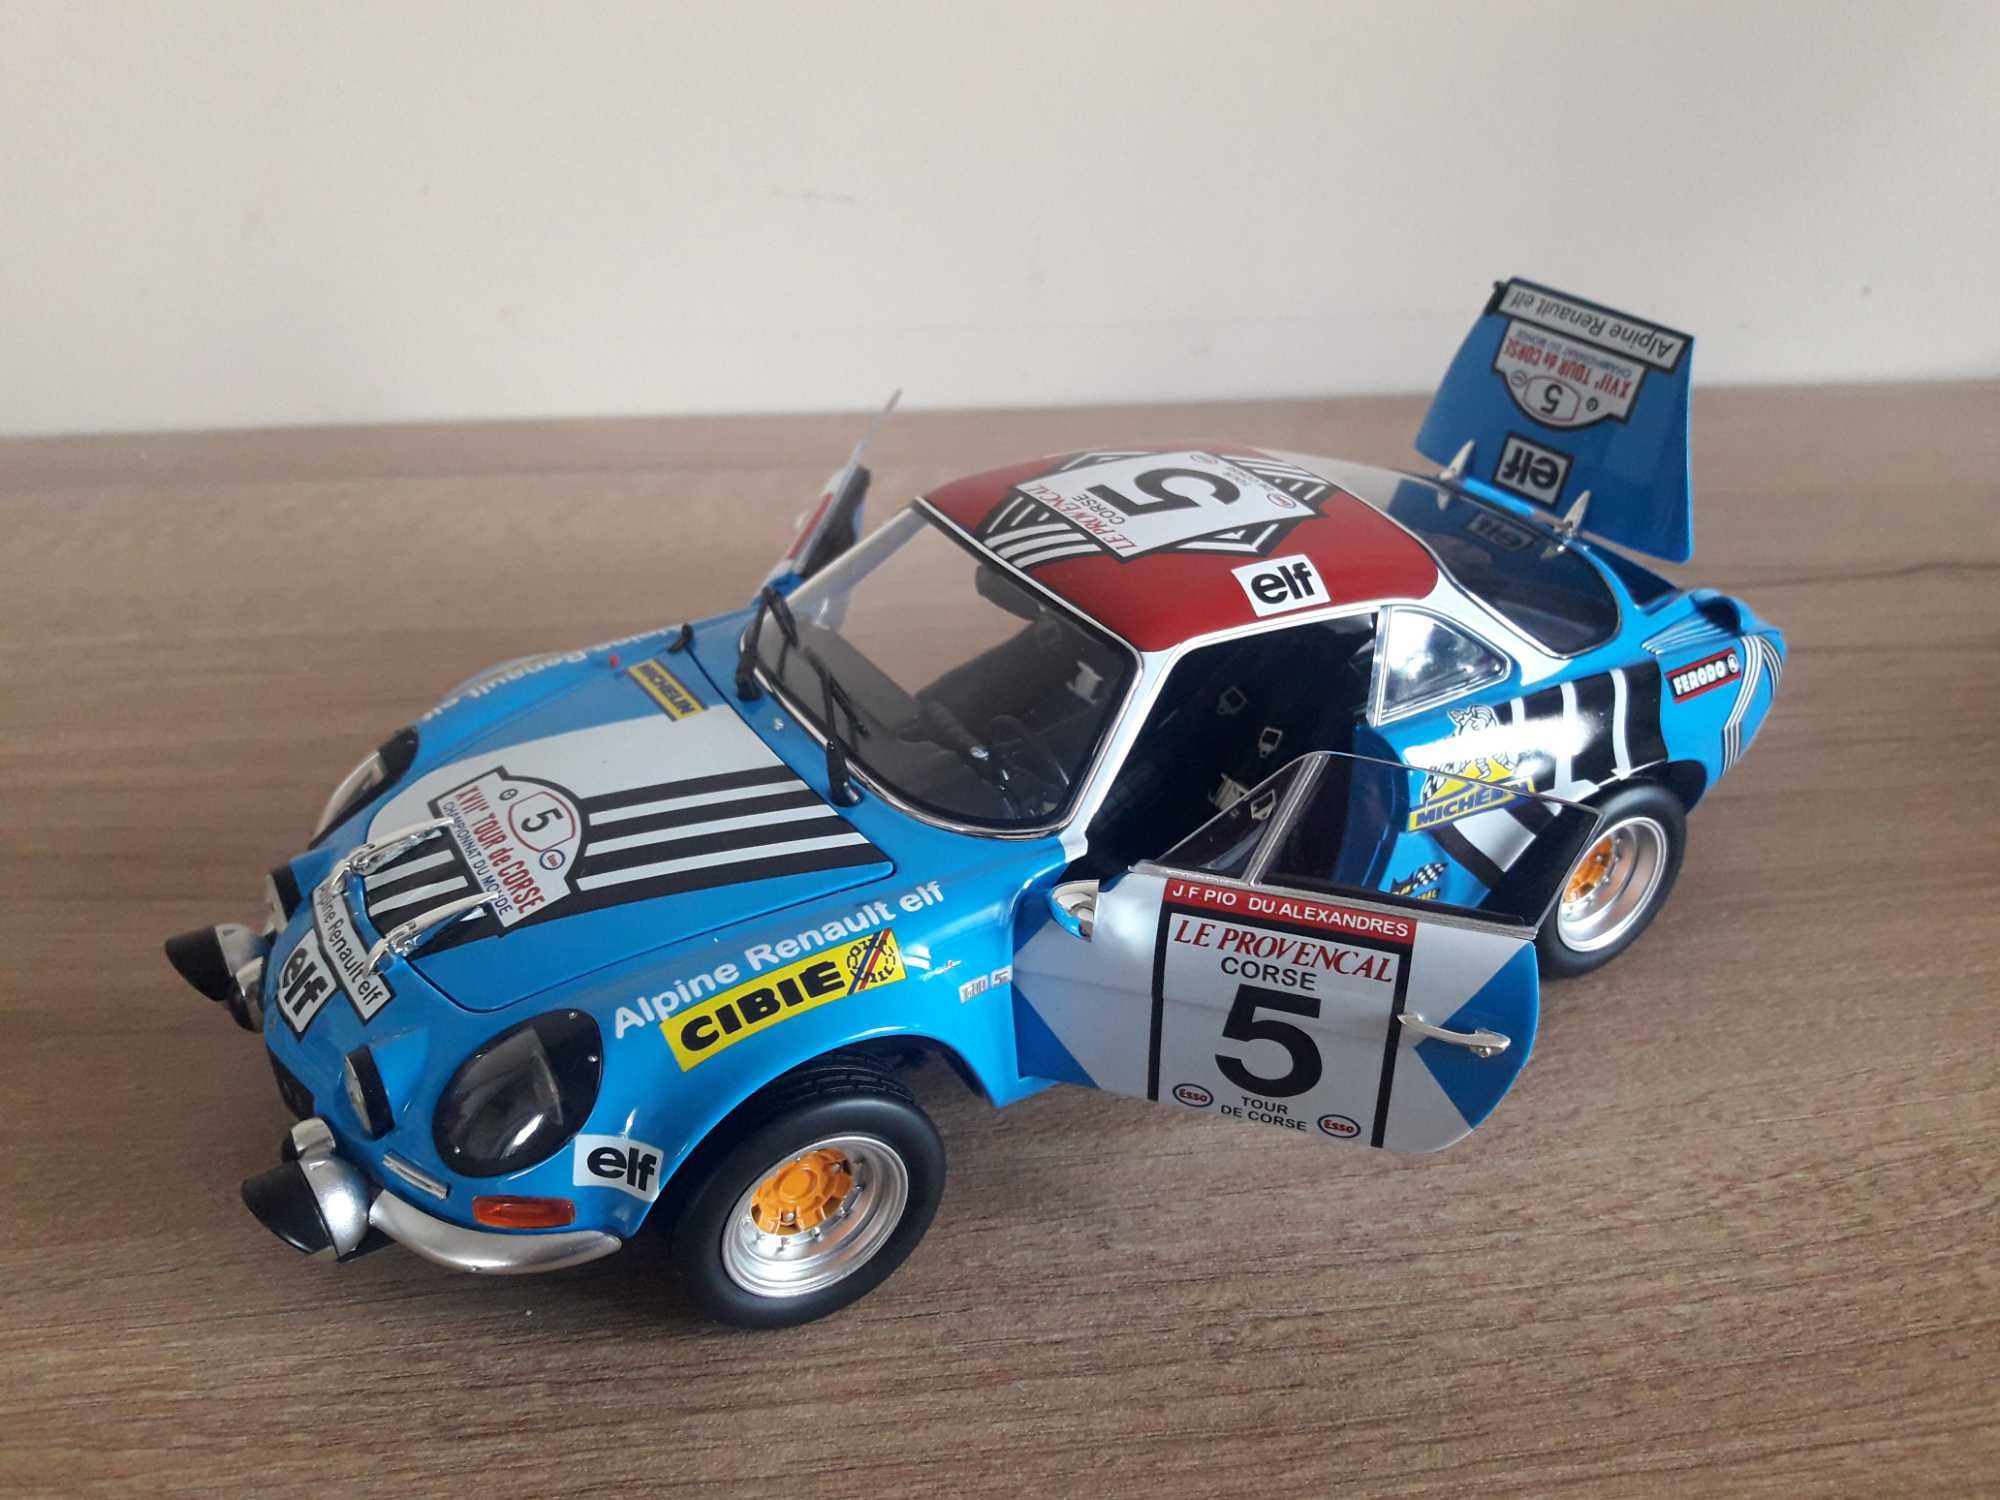 Alpine-Renault Kyosho 1:18 wrc rajd rally rallye